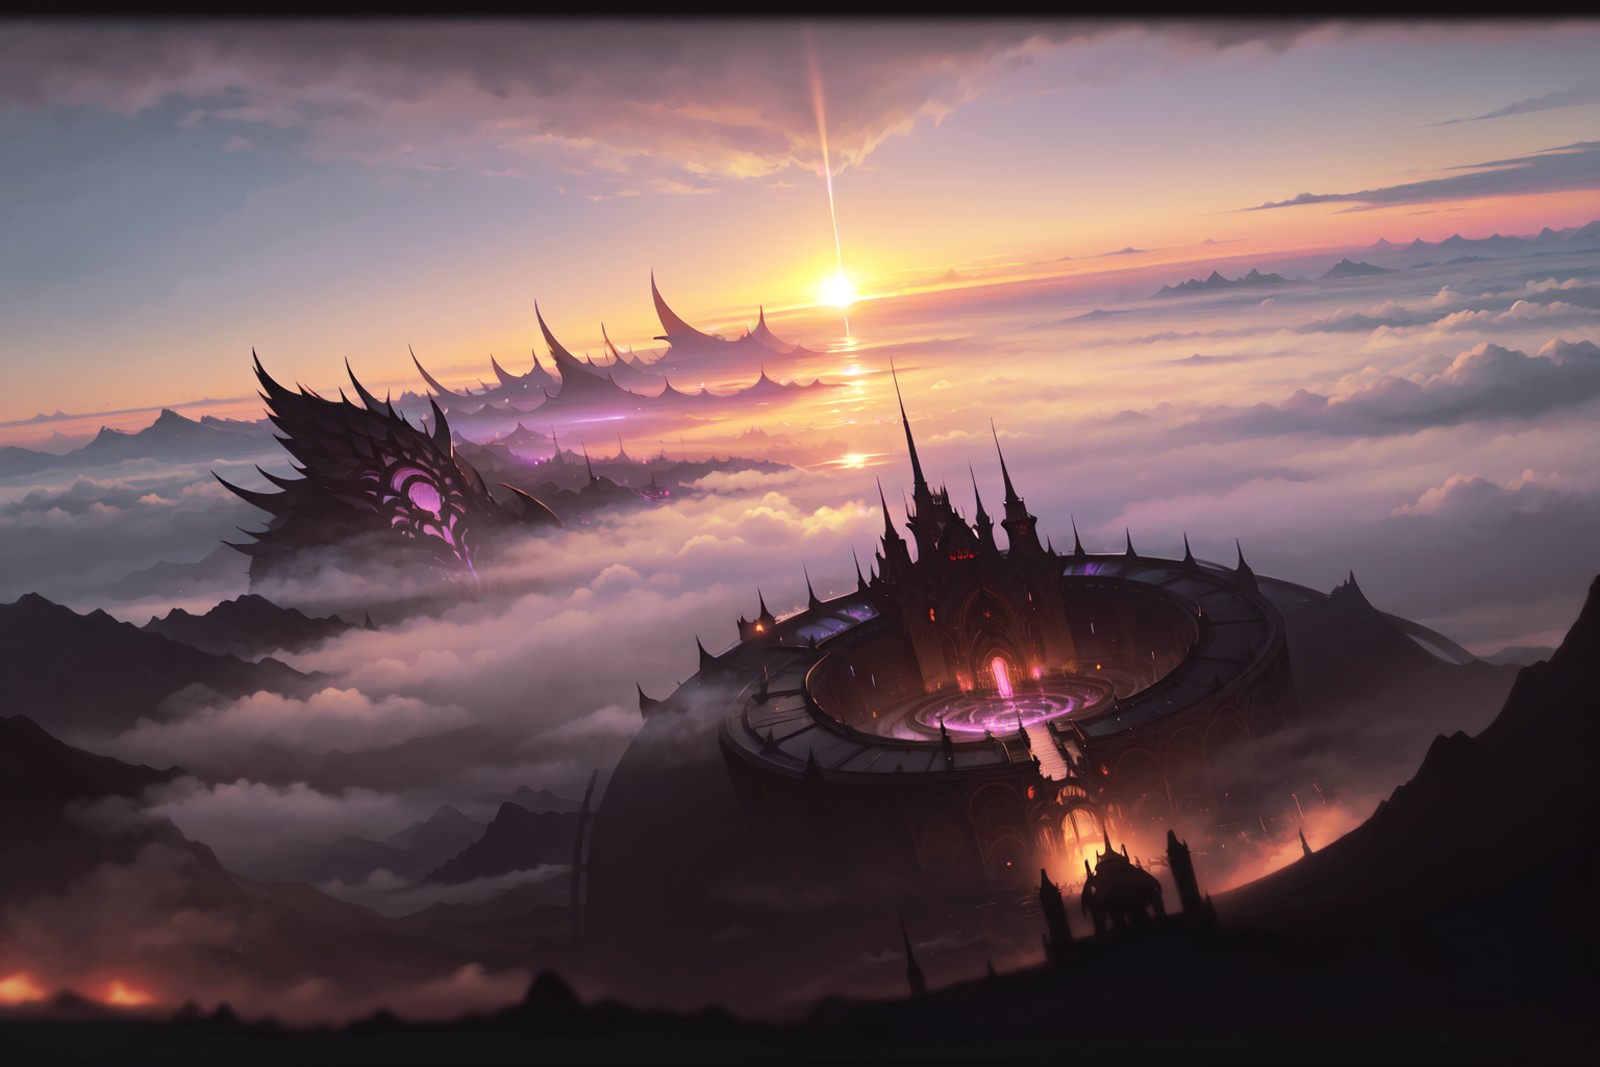 masterpiece, ff14style, landscape, city in the clouds, sunset, cloud, fog, <lora:FF14 LoadingArtV3.0:1>